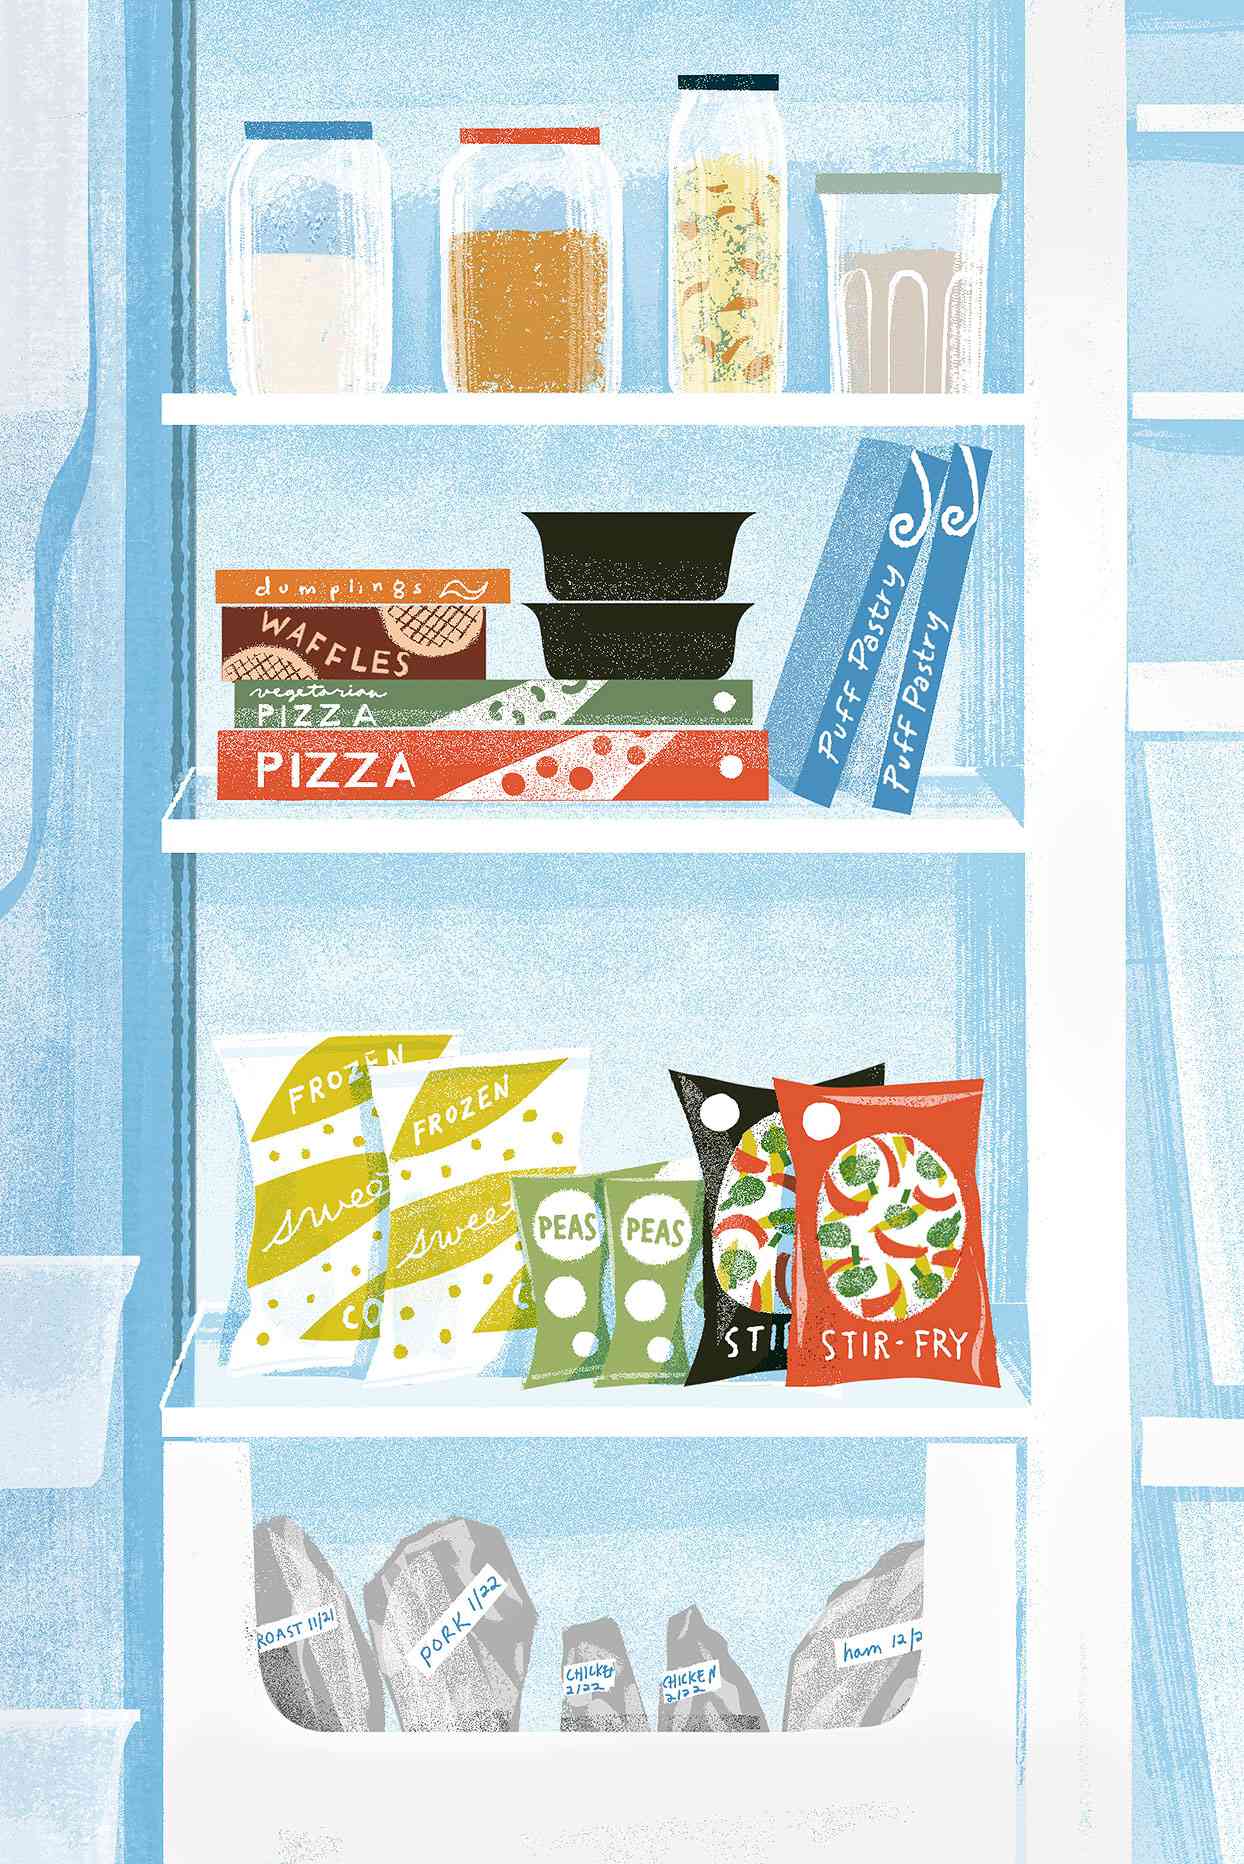 refrigerator shelves products illustration